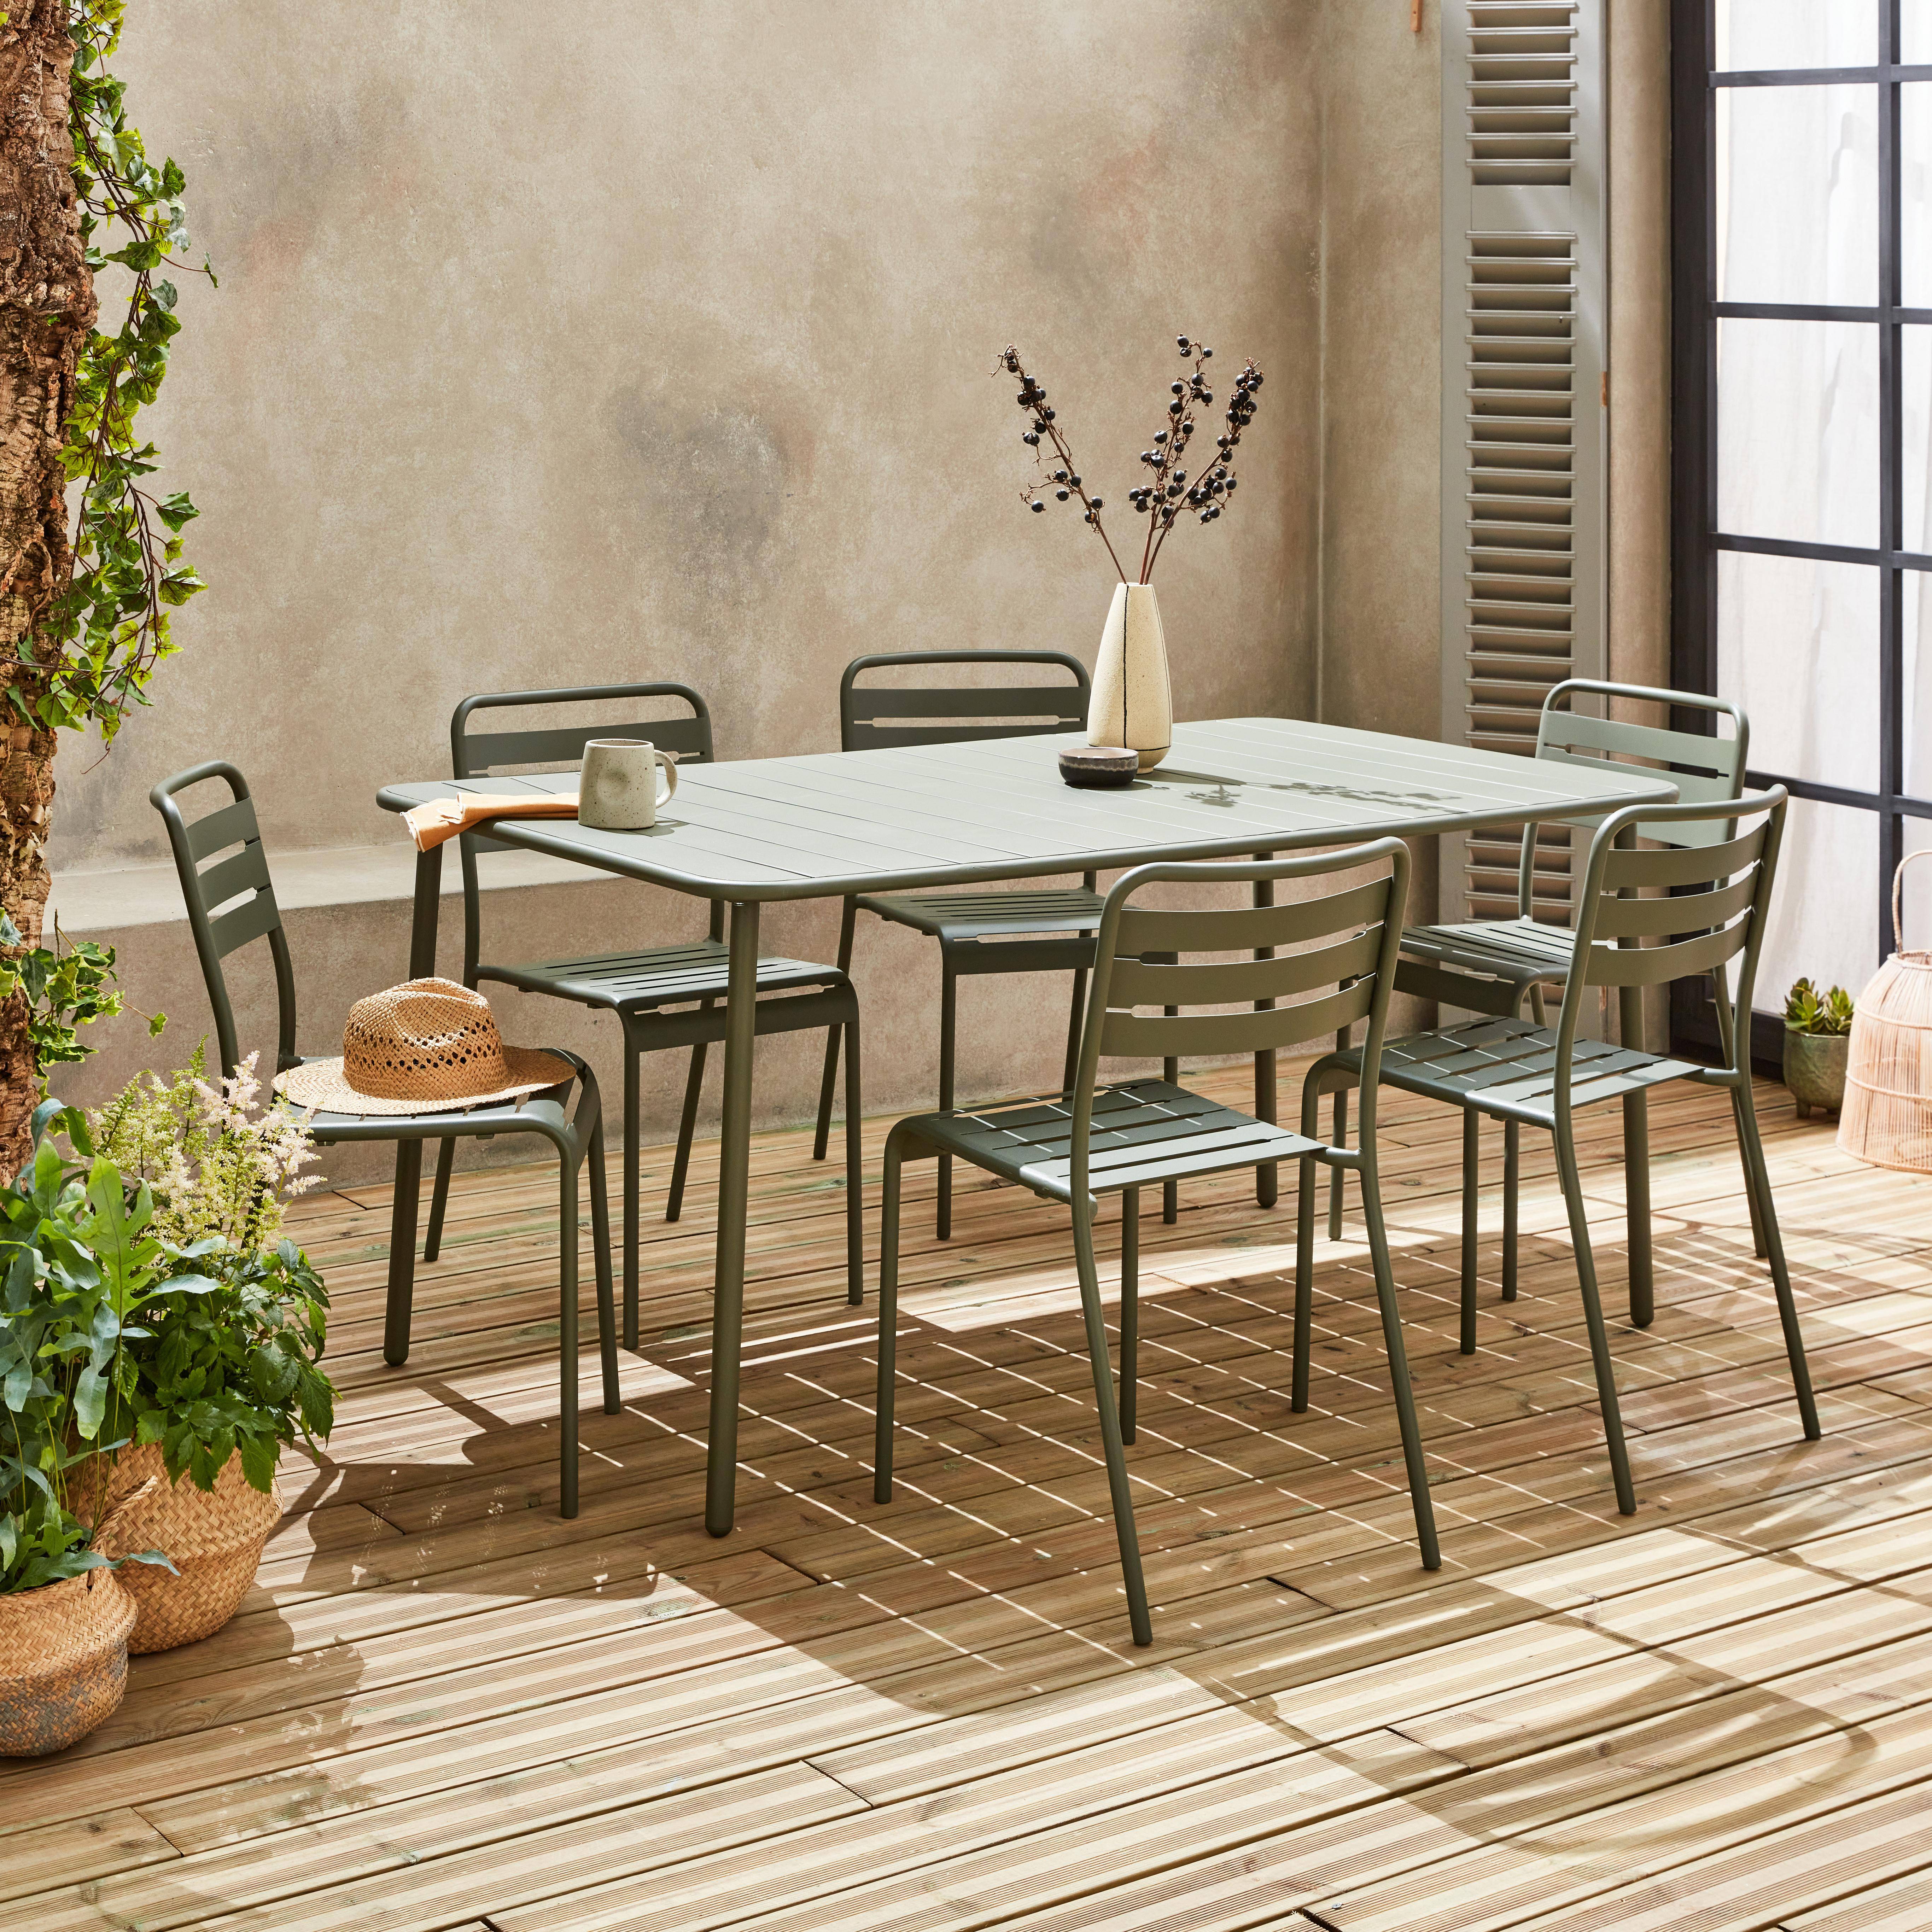 6-8 seater rectangular steel garden table set with chairs, 160cm, khaki green,sweeek,Photo1